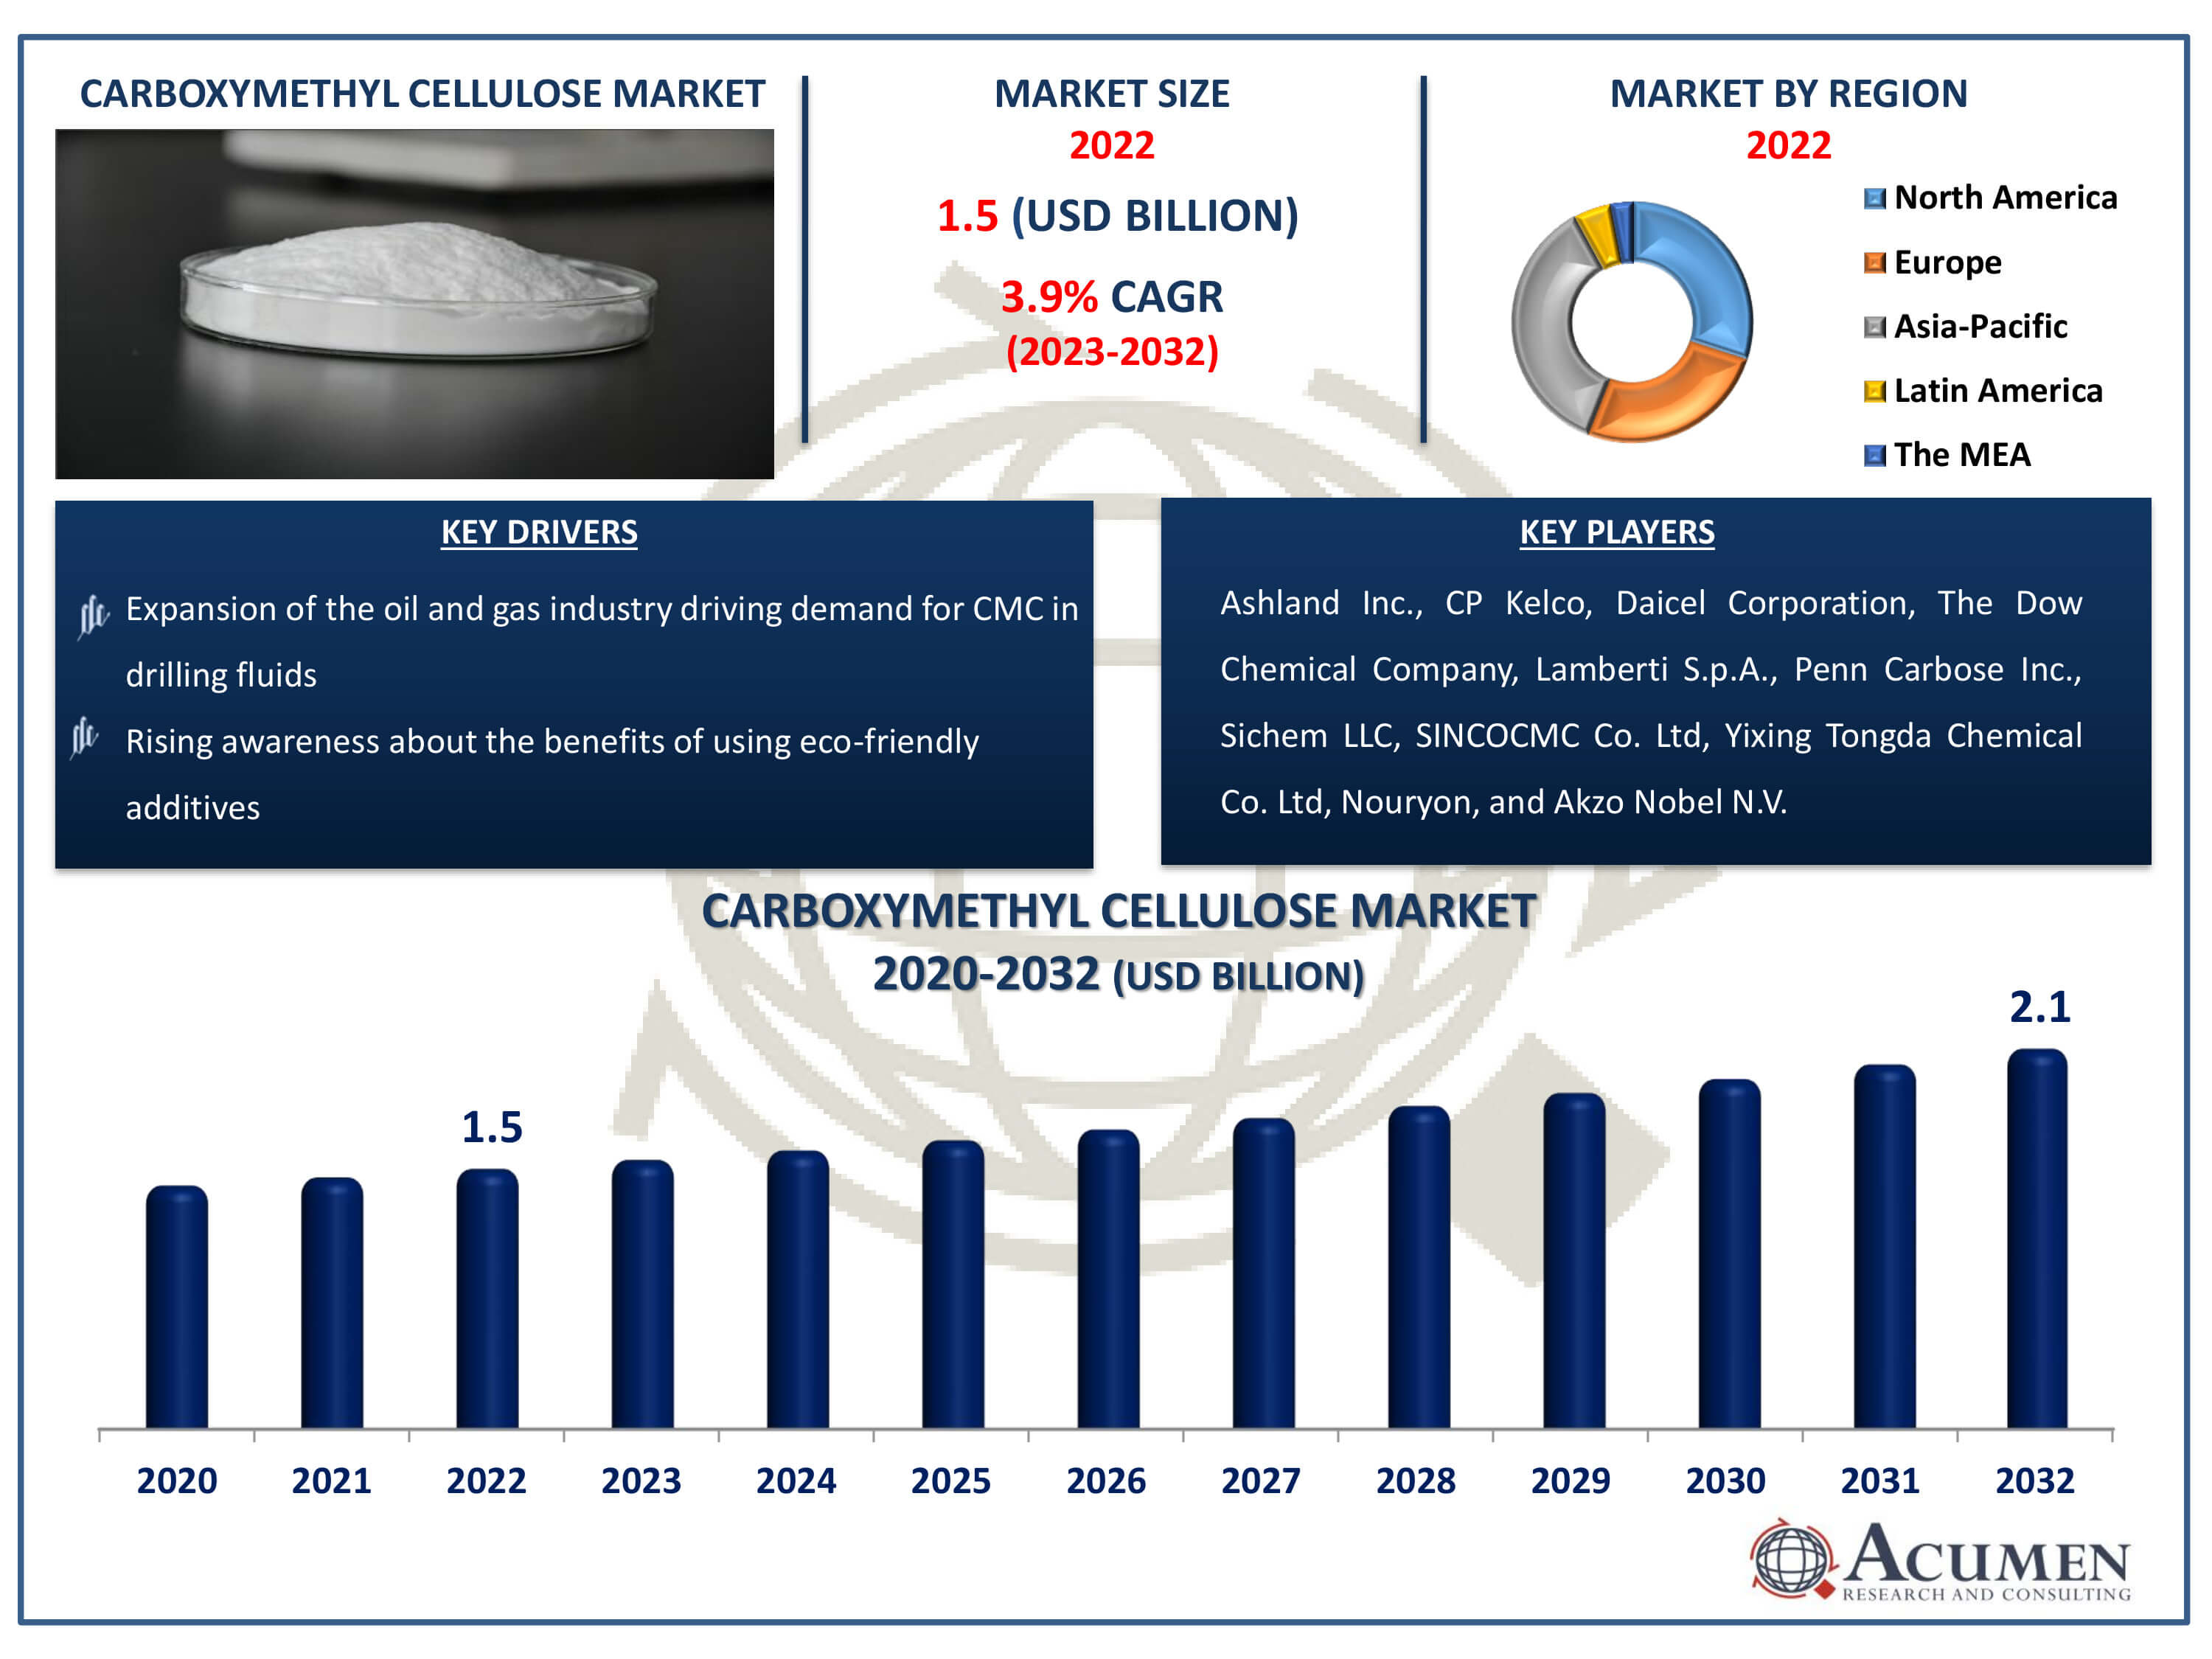 Carboxymethyl Cellulose Market Size